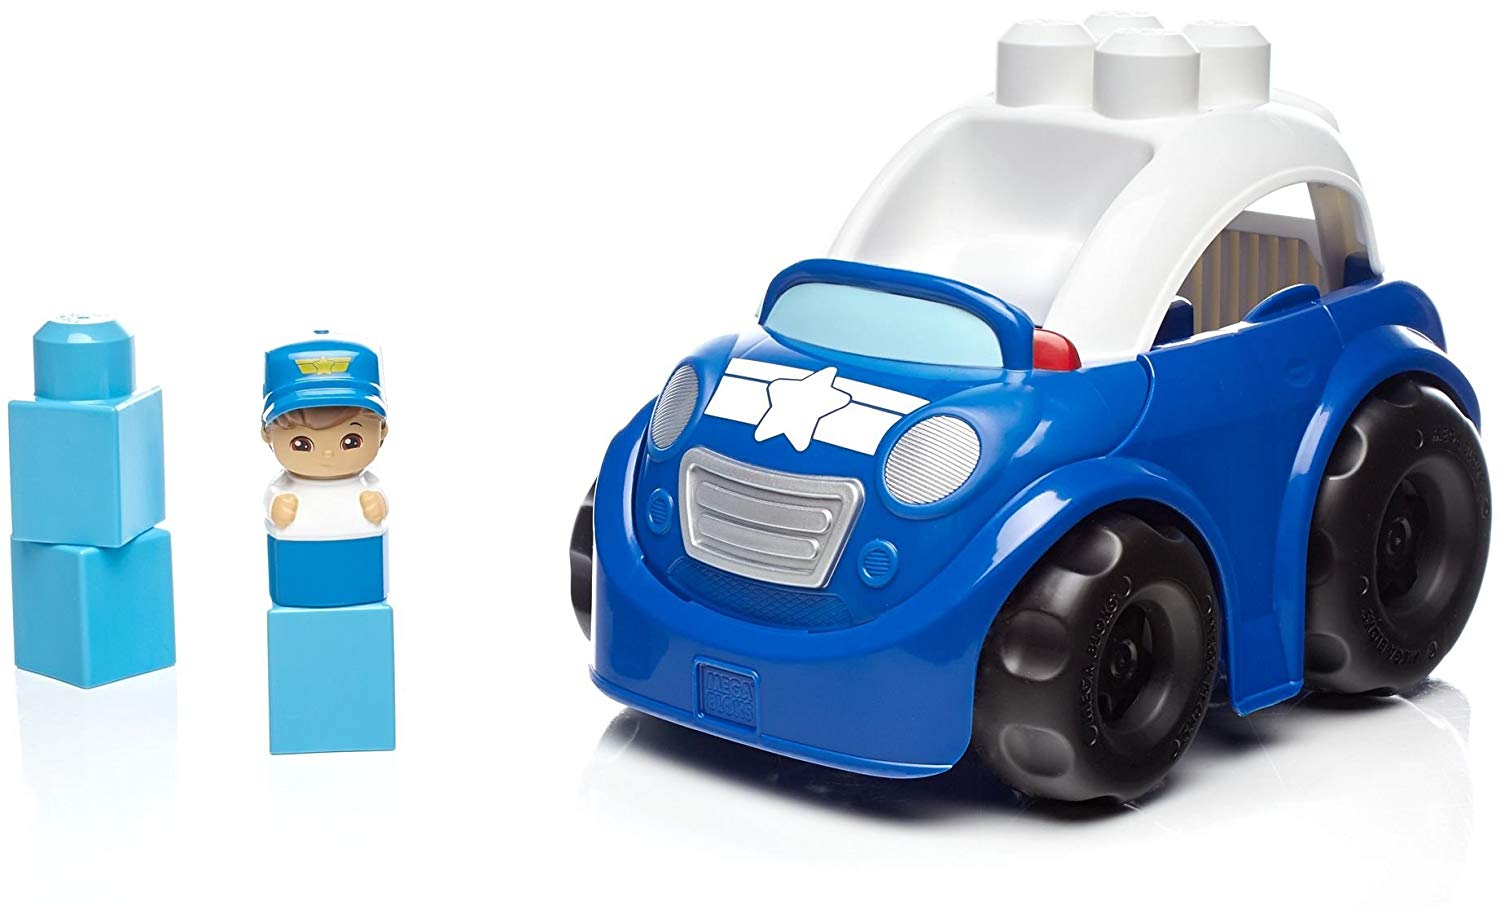 Mattel Mega Bloks Dyt60 – Police Car, Preschool Construction Boxes